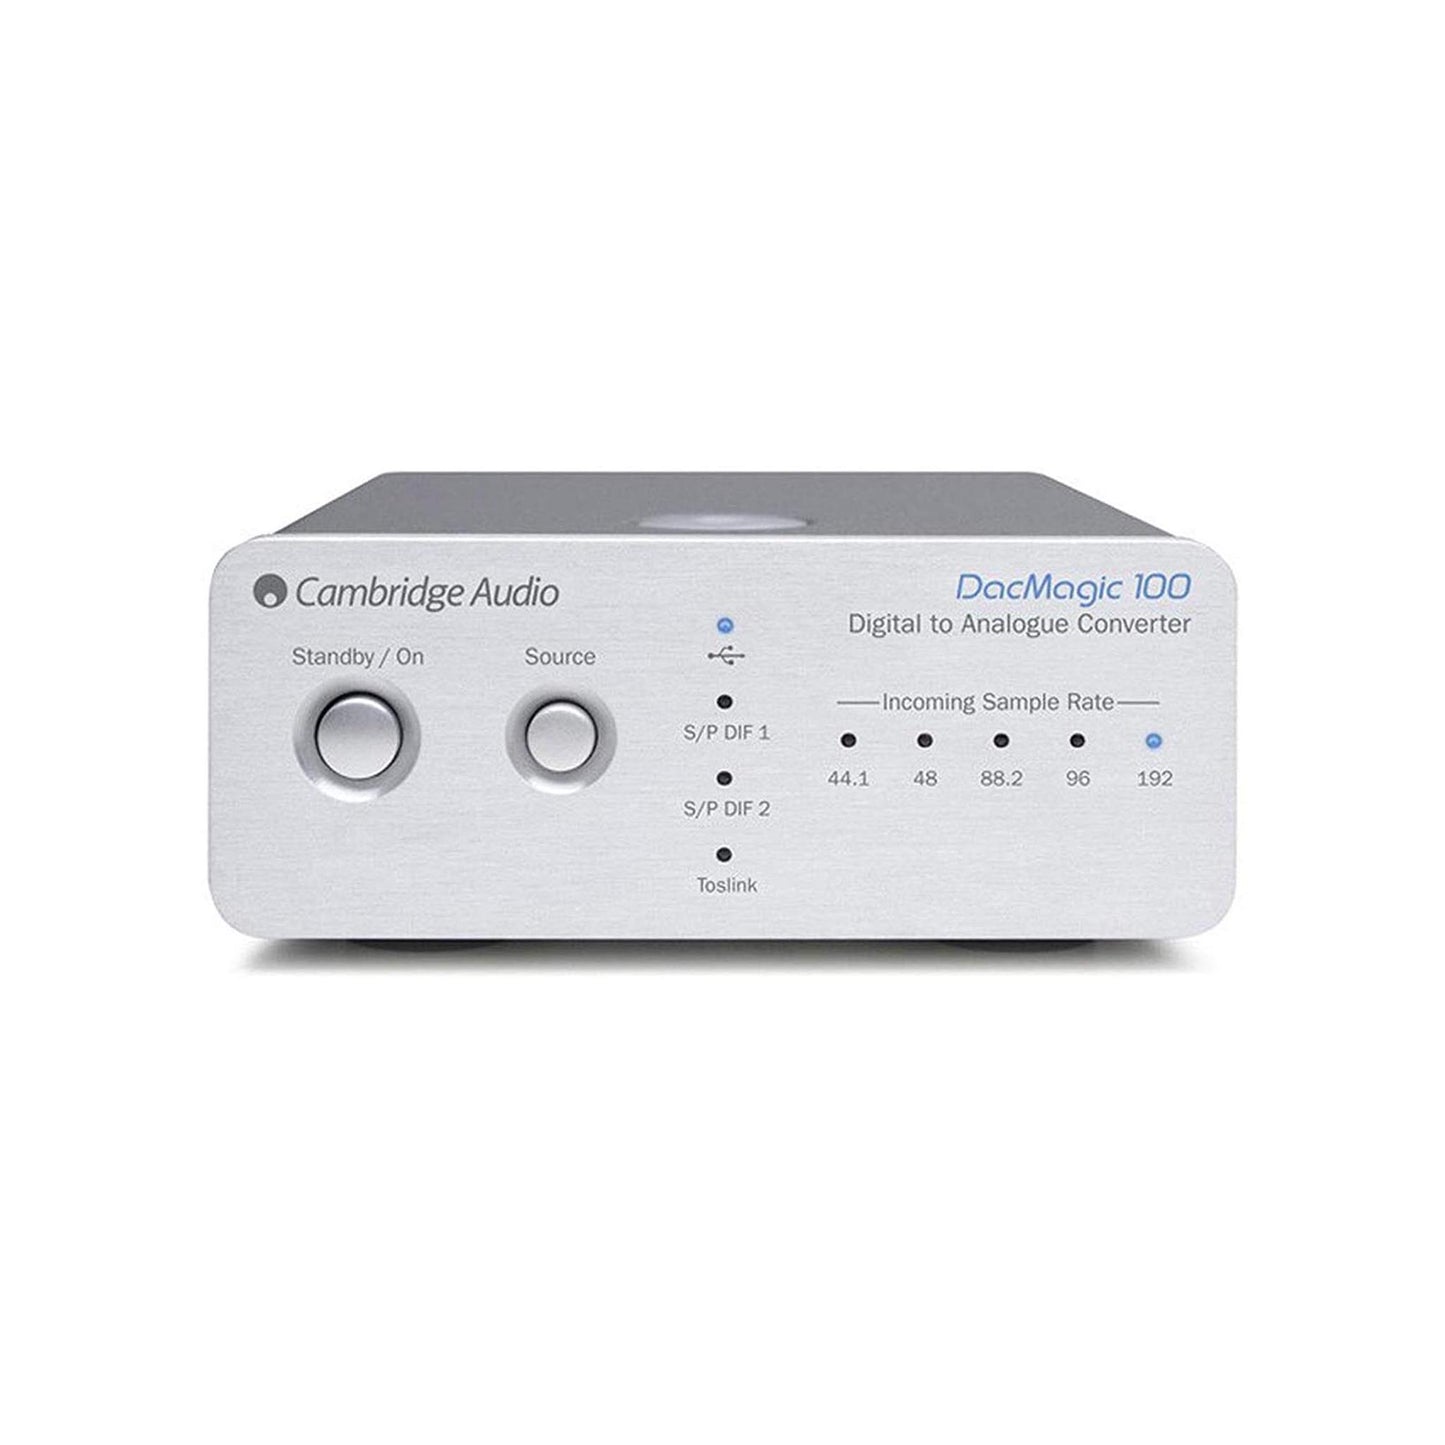 Cambridge Audio DacMagic 100 DAC w/ USB